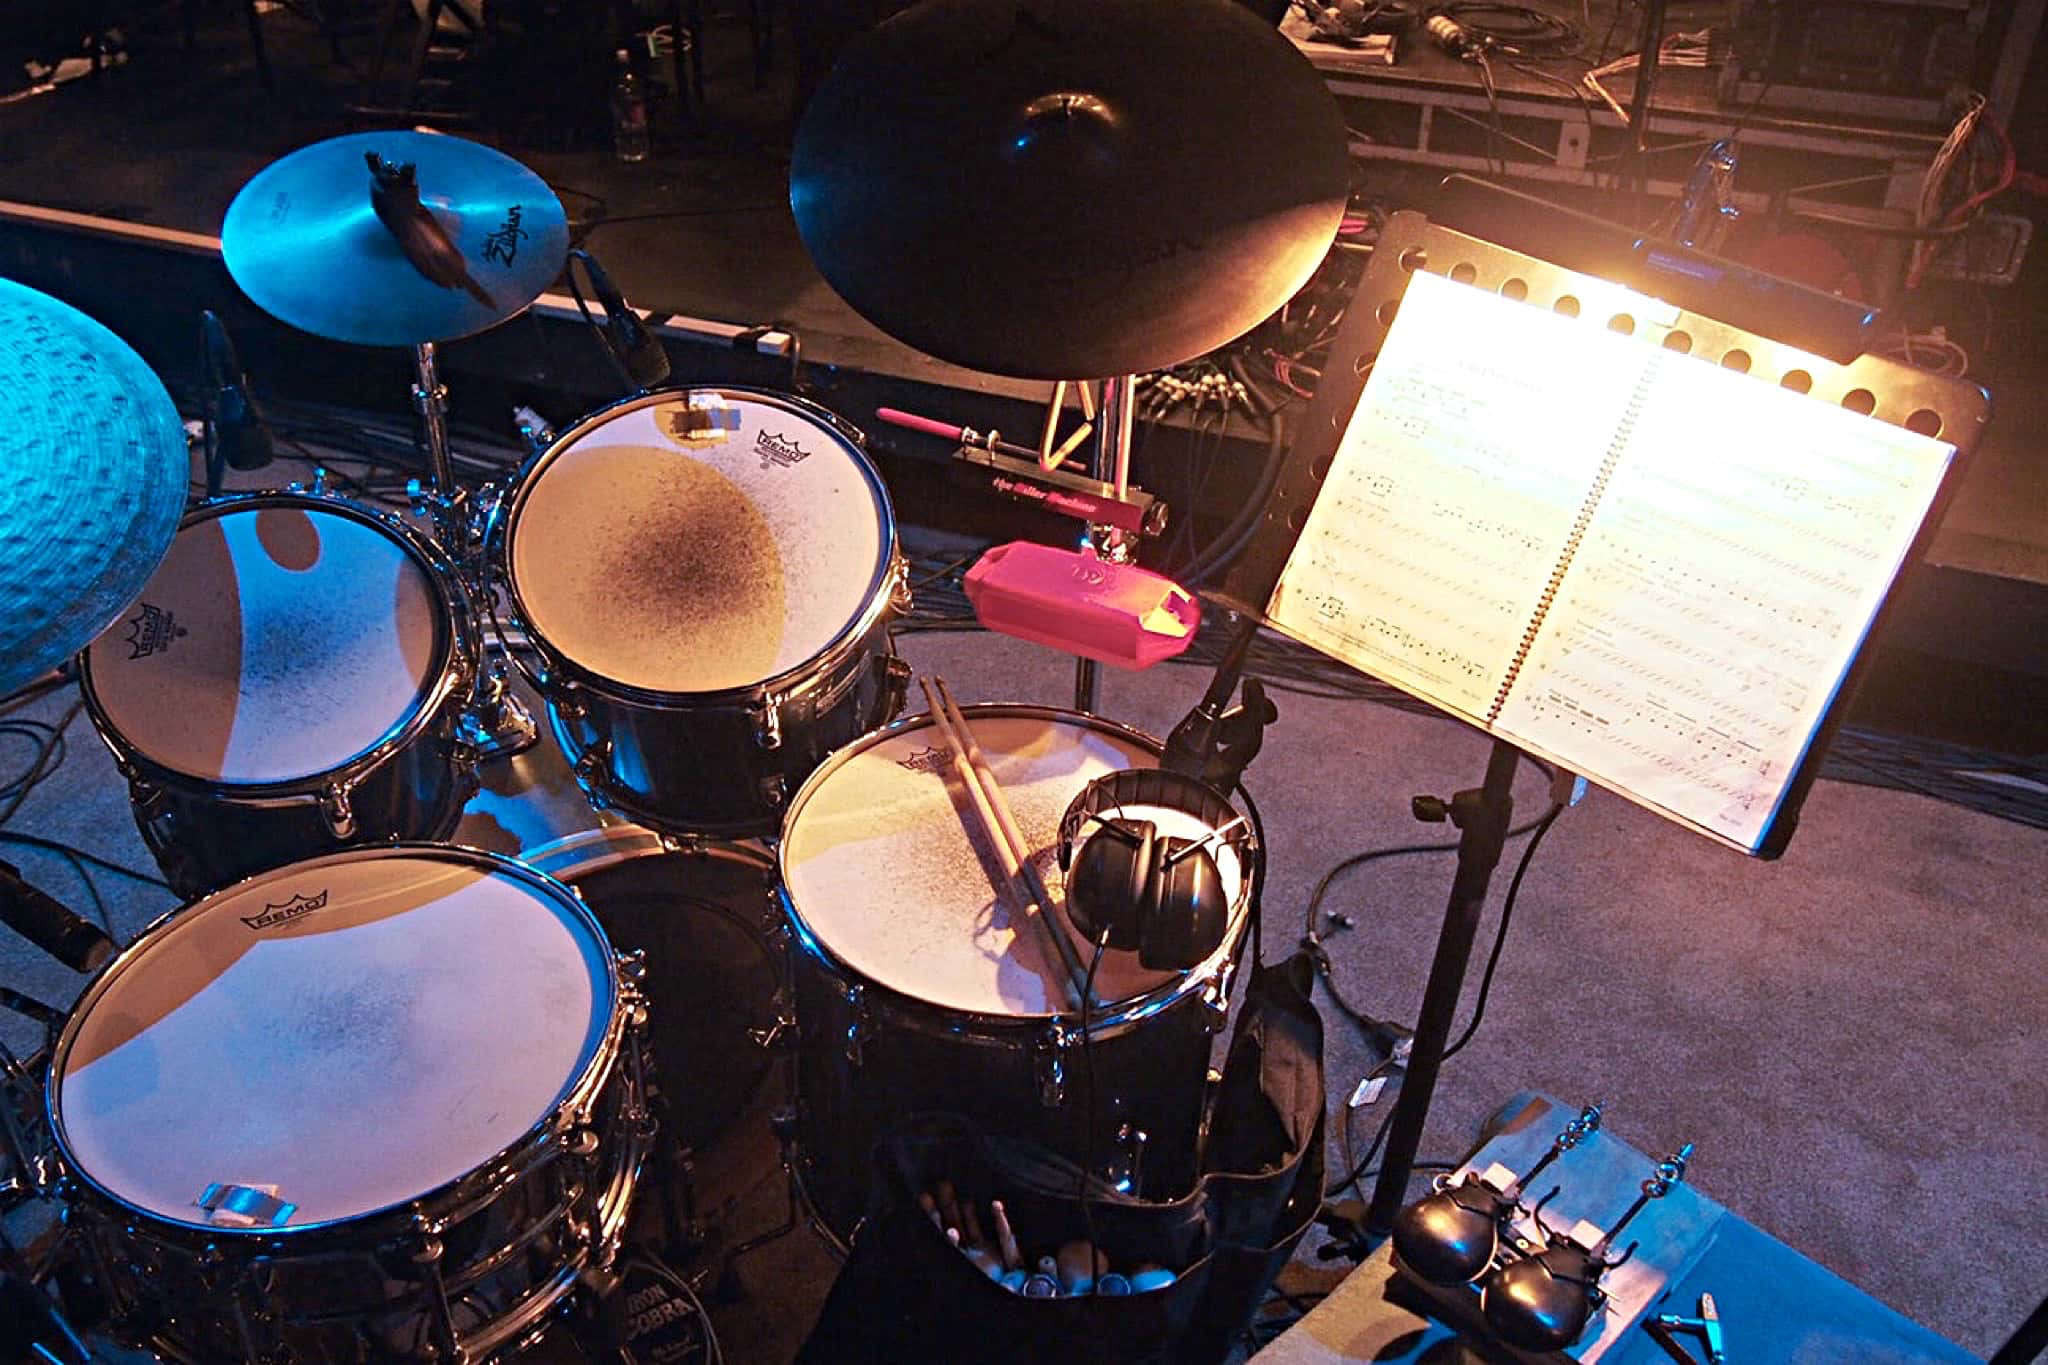 Tim Sellars’ drum set setup for Showbiz Christchurch’s production of Evita at the Isaac Theatre Royal in Christchurch, New Zealand.